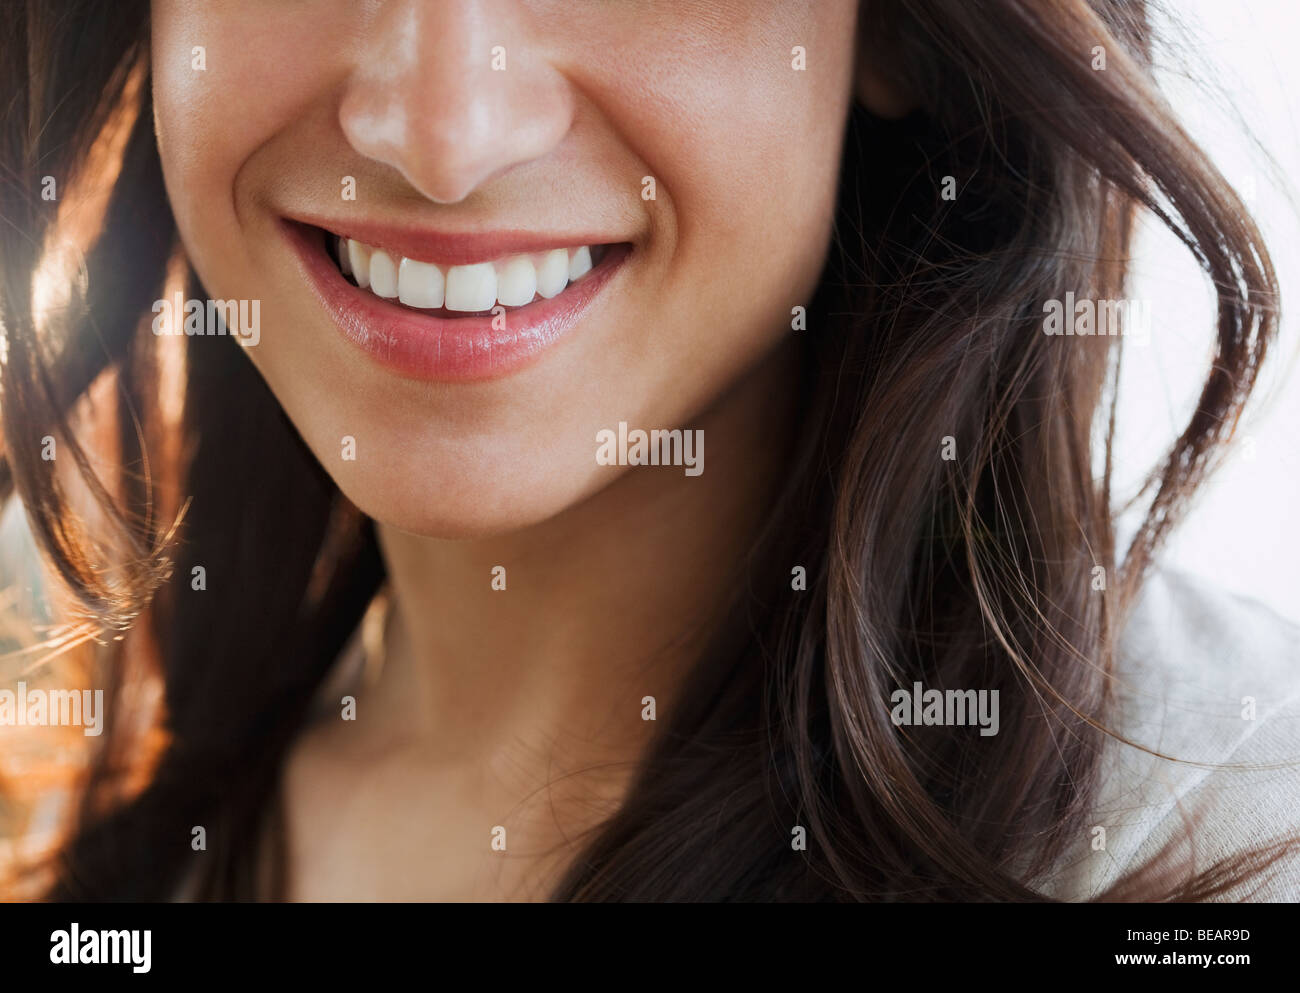 Close up of Hispanic woman's smile Stock Photo